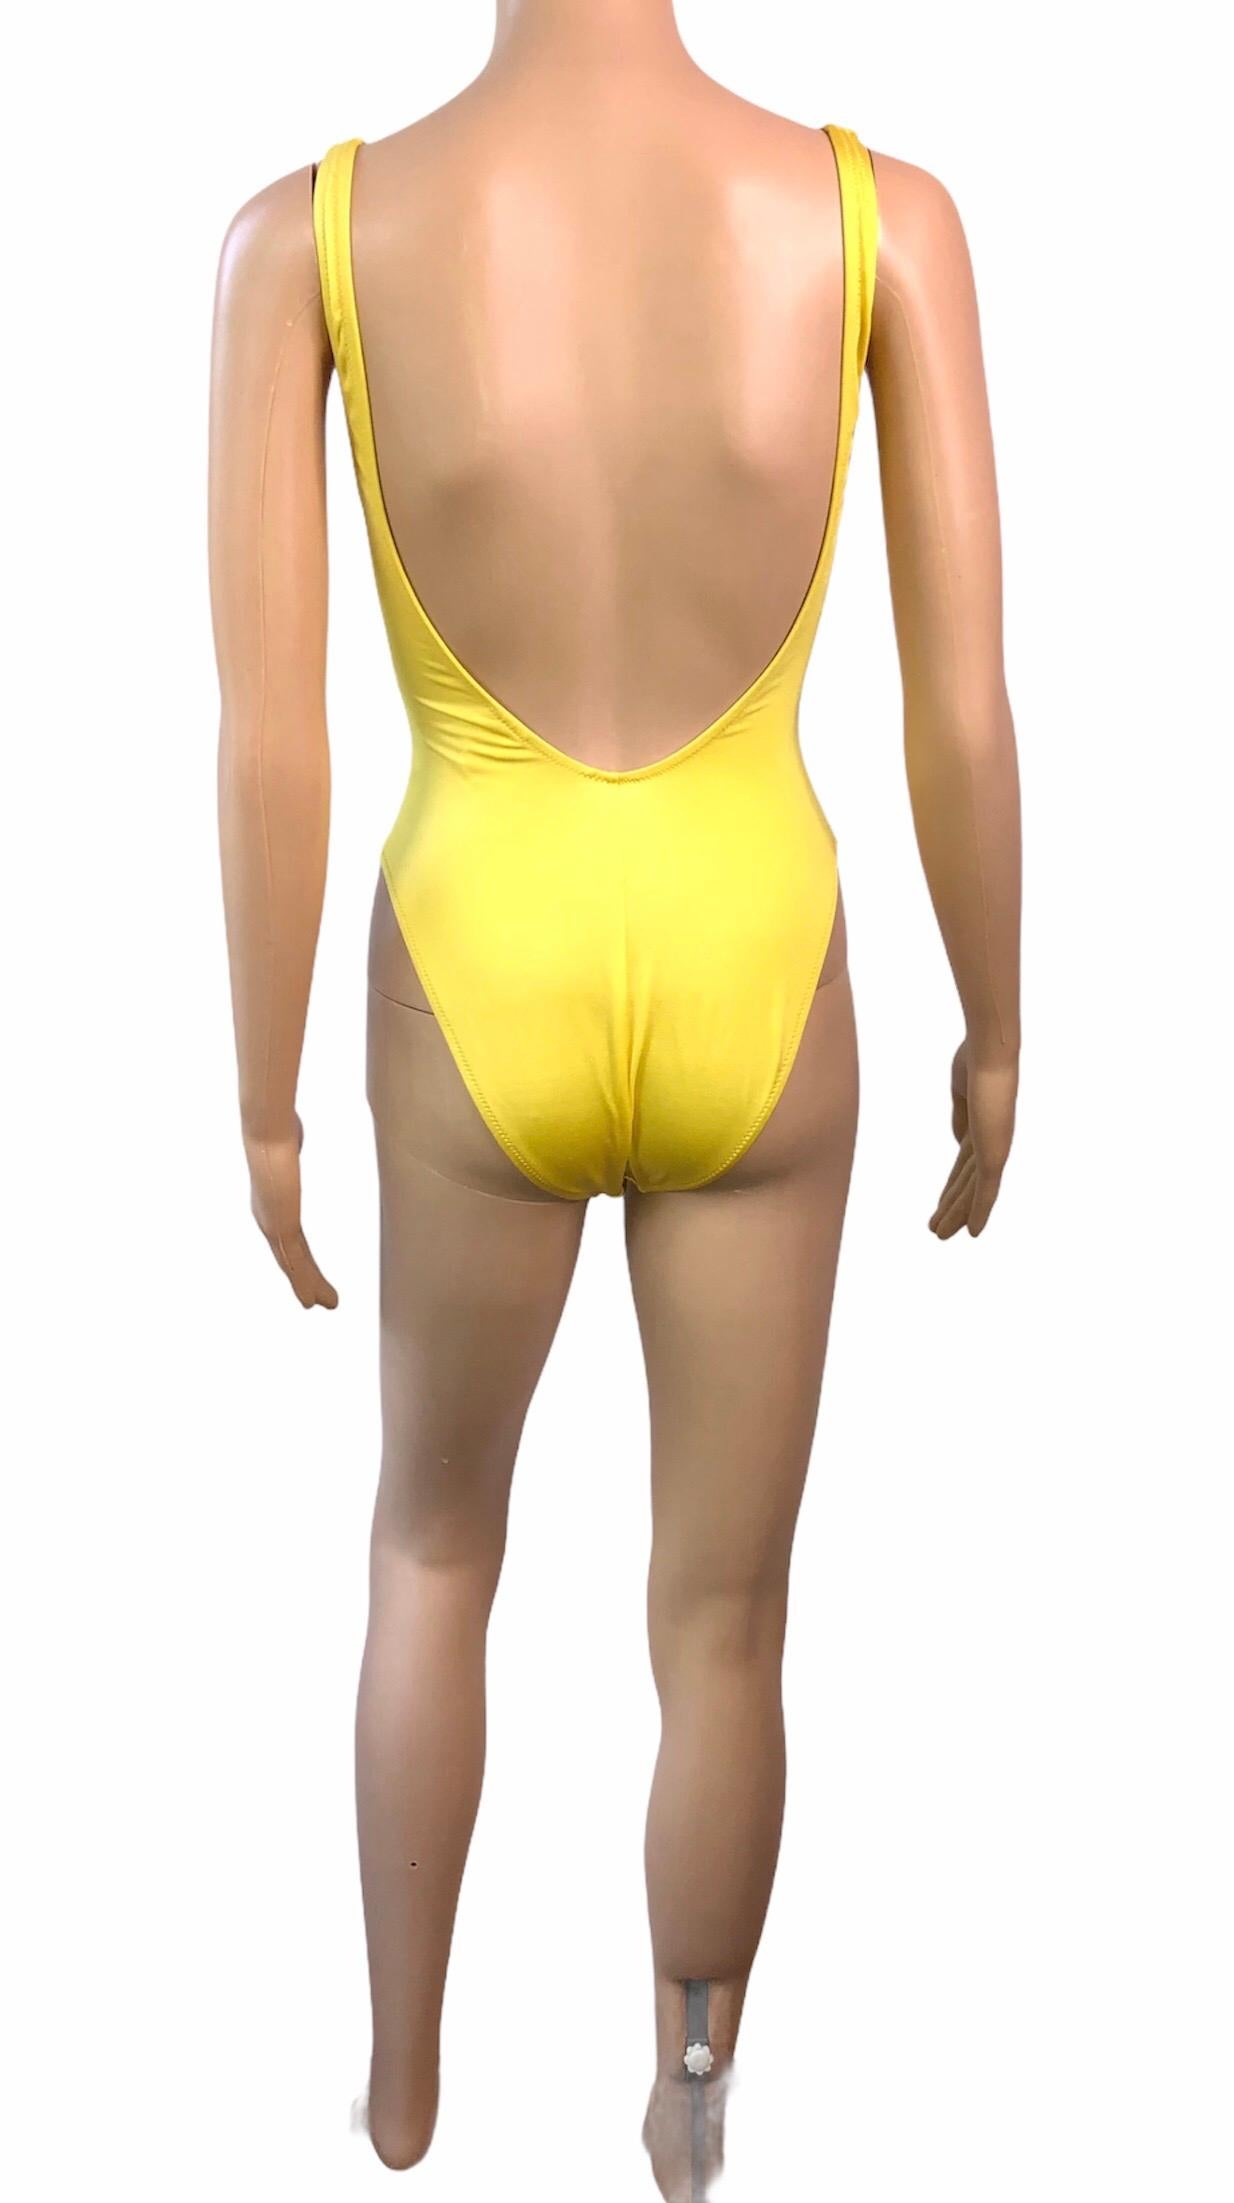 Gianni Versace S/S 1996 Vintage Crystal Zipper Yellow Bodysuit Swimwear Swimsuit For Sale 1